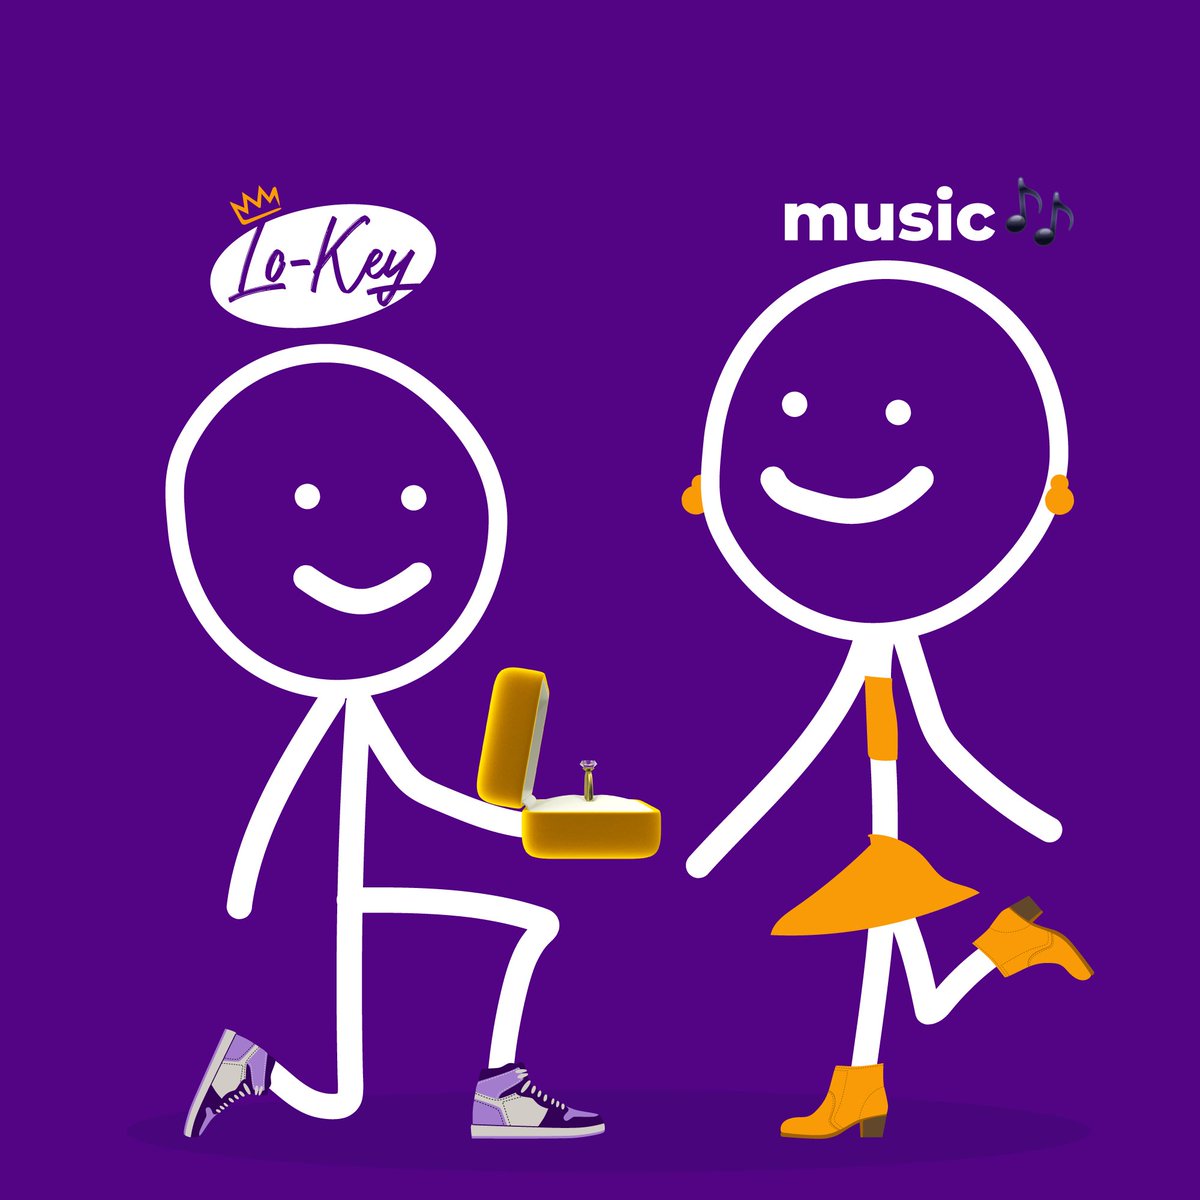 ☺️ She said yes 🫶♥︎💍 
.
.
.
#LoKey #couplgoals #relationships #Music #love #memes